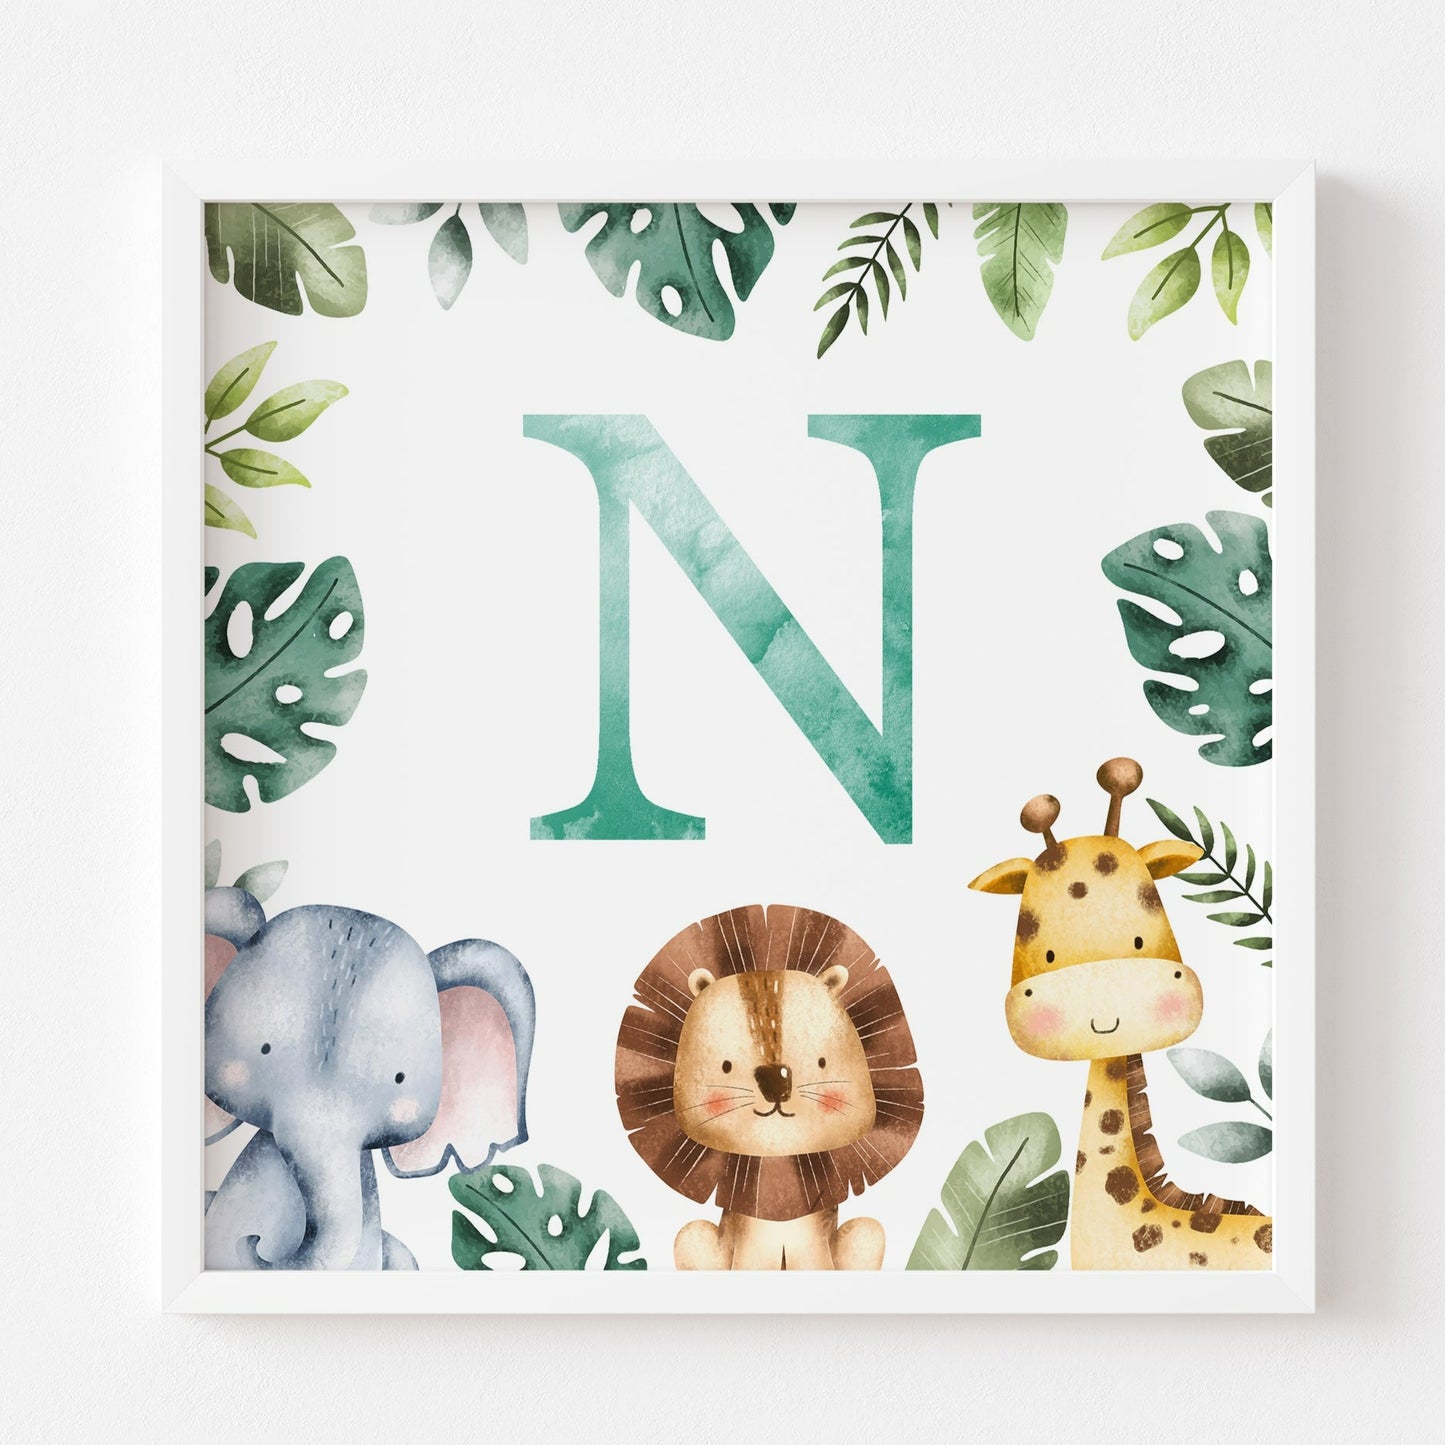 Safari animal print download perfect for a childrens bedroom or nursery.